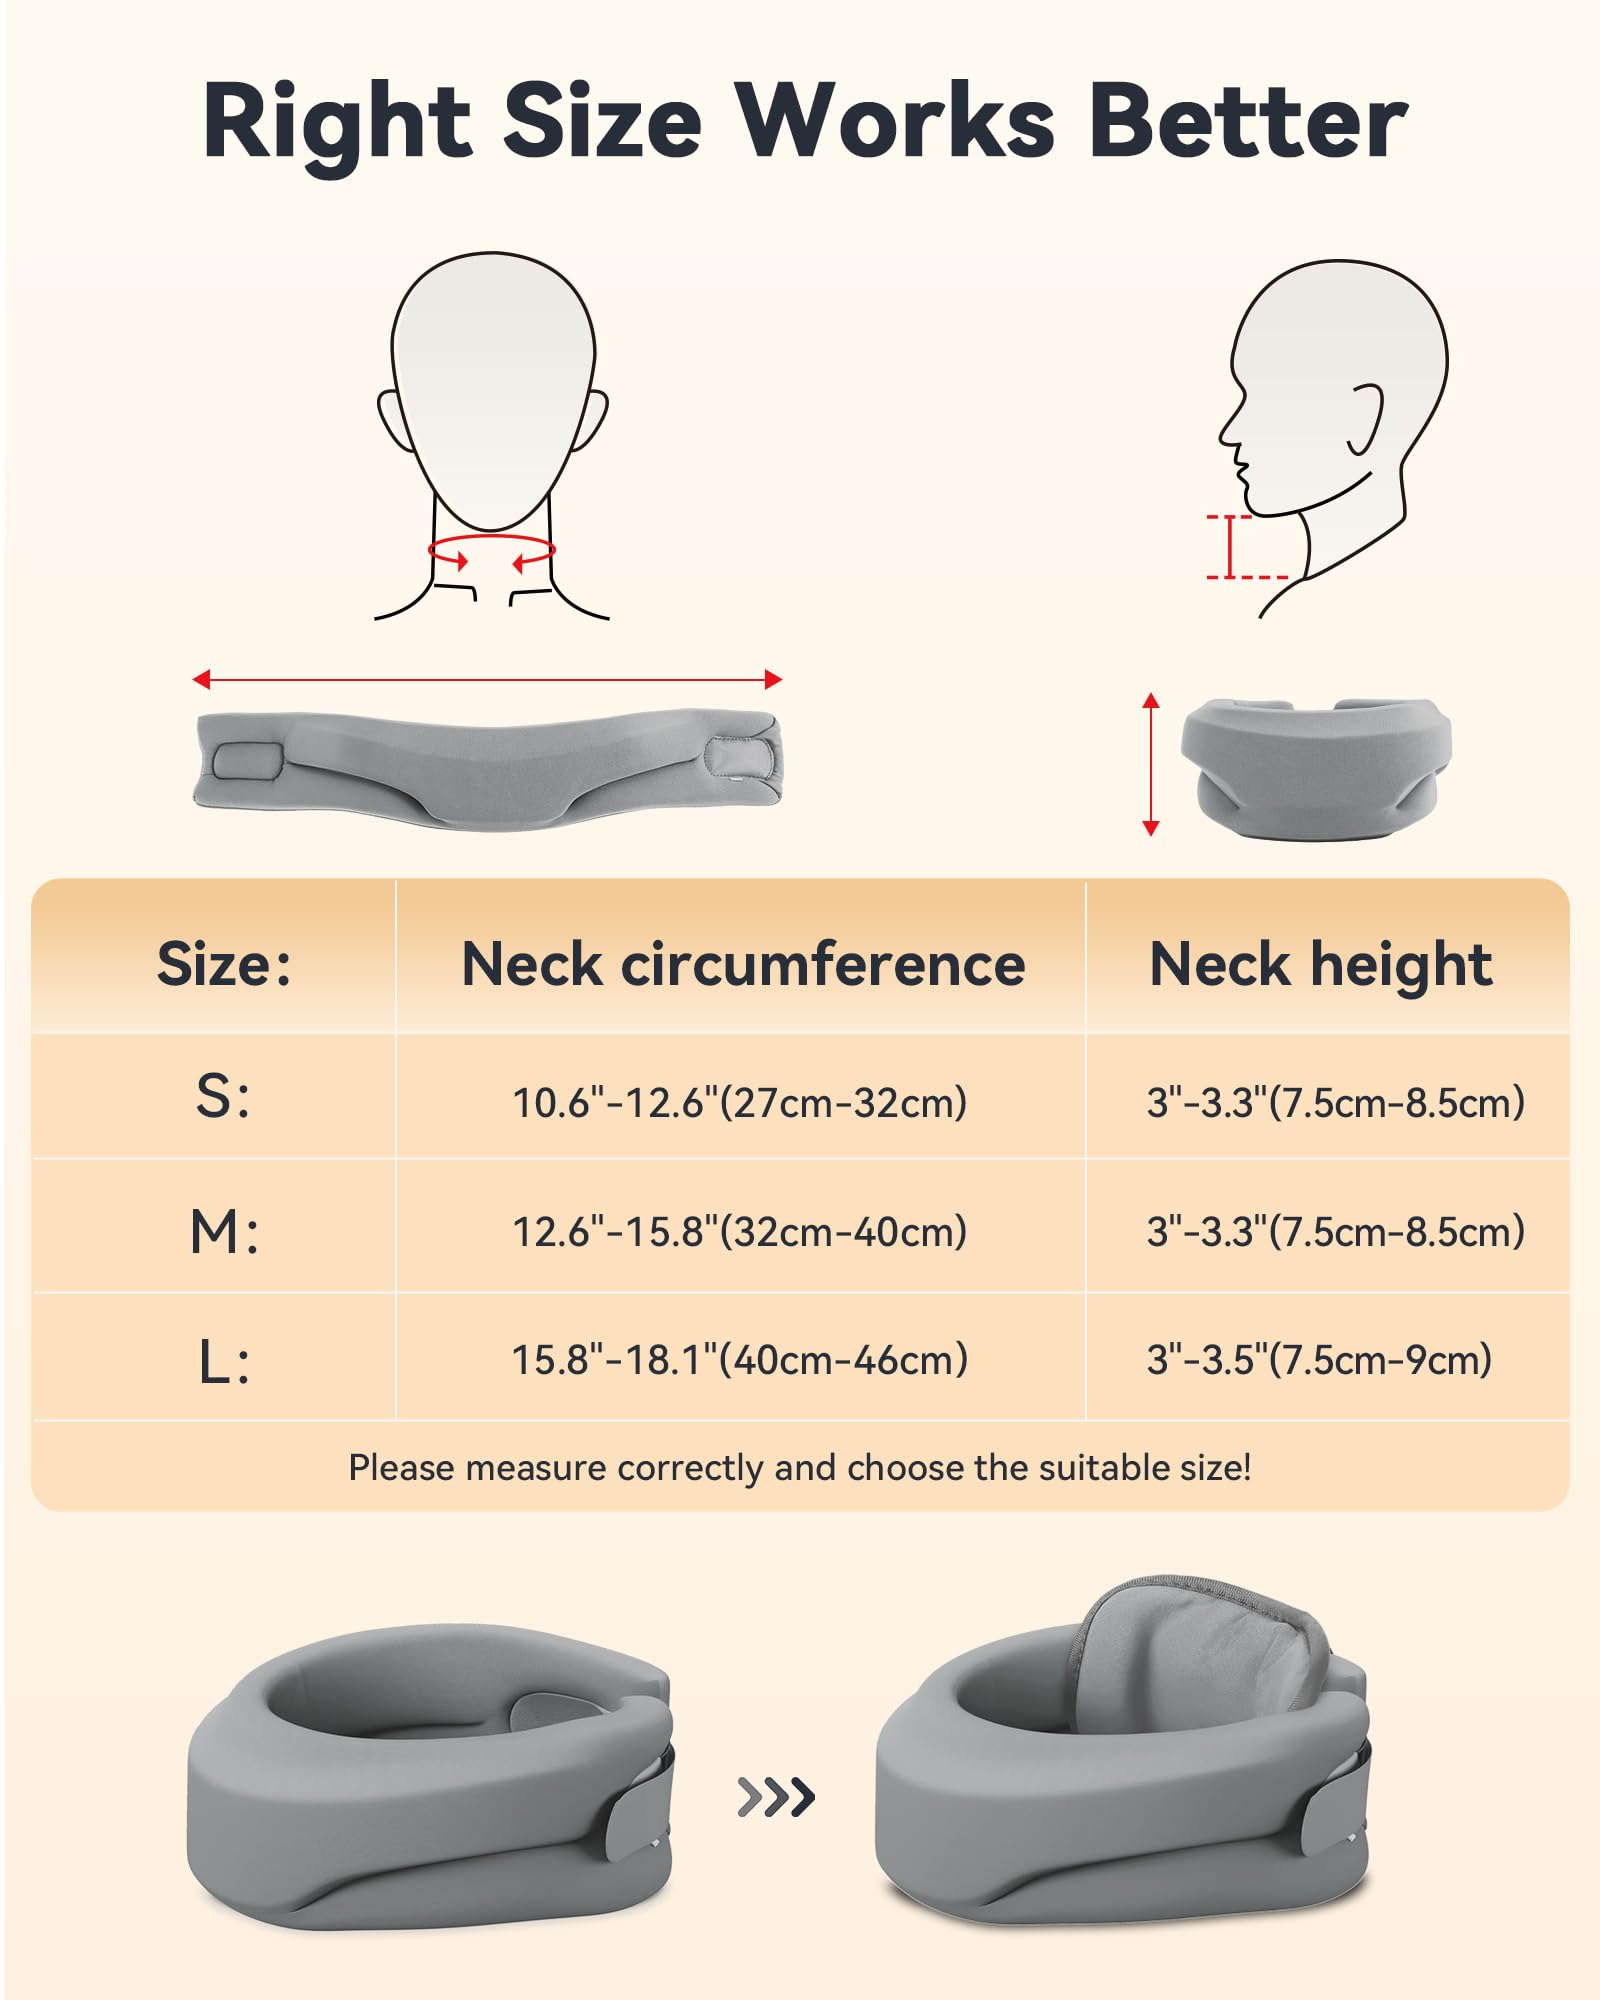 Heated Neck Brace Cervical Collar - Neck Support Brace for Sleeping, Soft Foam Wraps Keep Vertebrae Stable and Aligned for Relief of Cervical Spine Pressure for Women & Men